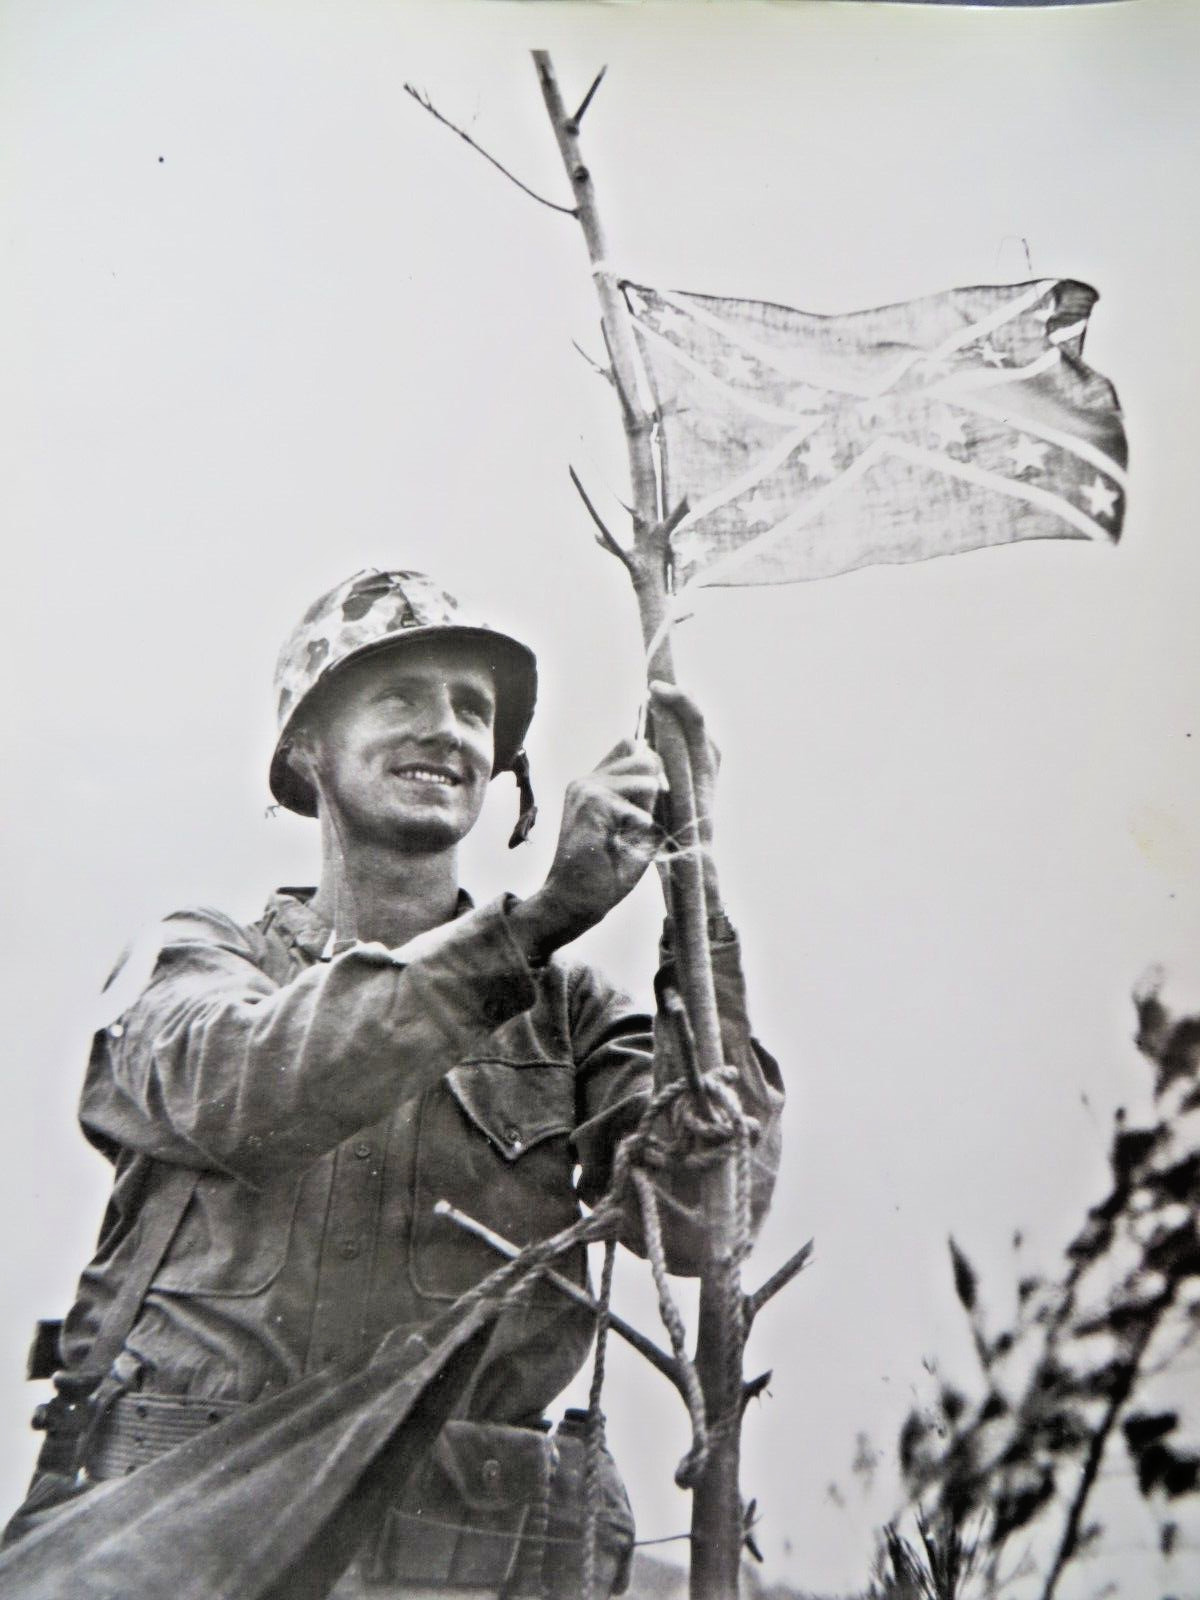 VINTAGE WW2 ORIGINAL USMC PHOTOGRAPH OKINAWA: ASSISTANT SURGEON HOISTS FLAG